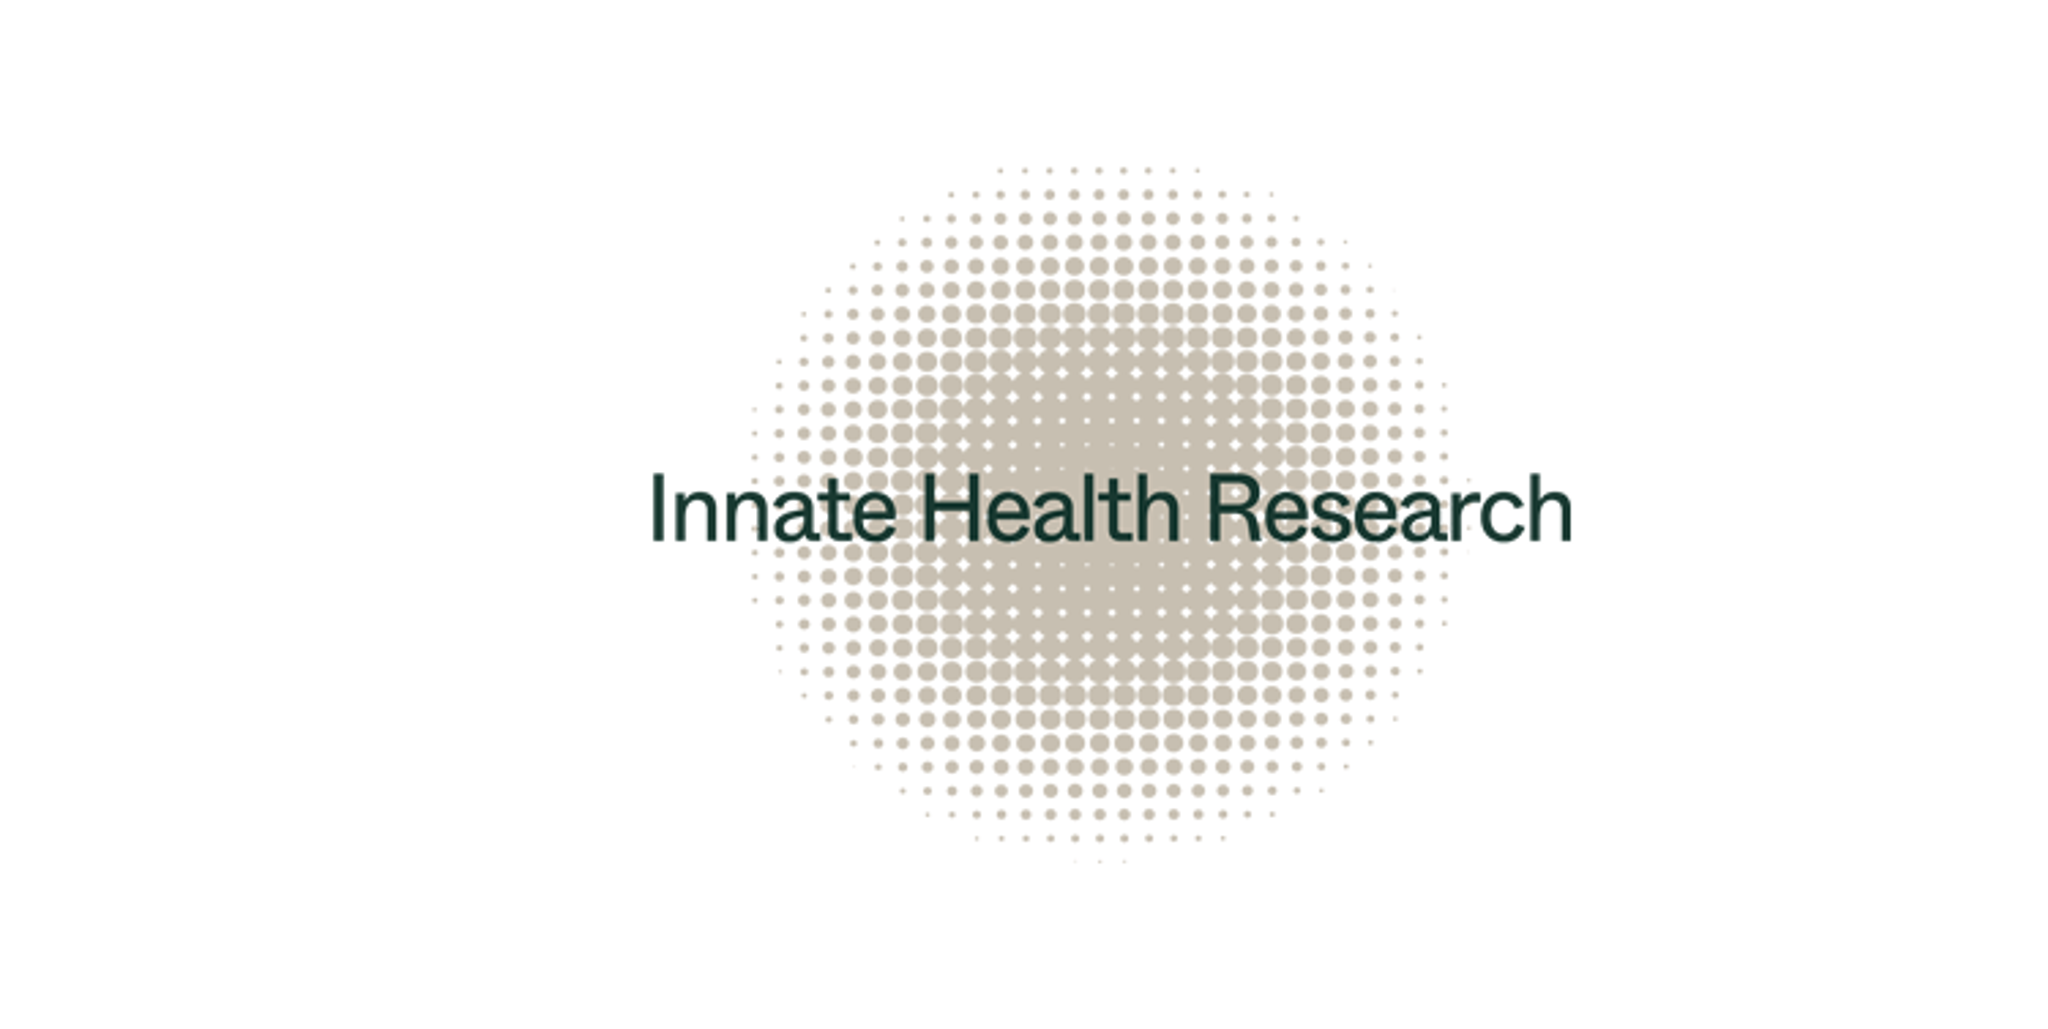 innate health research logo 2023 annual report 